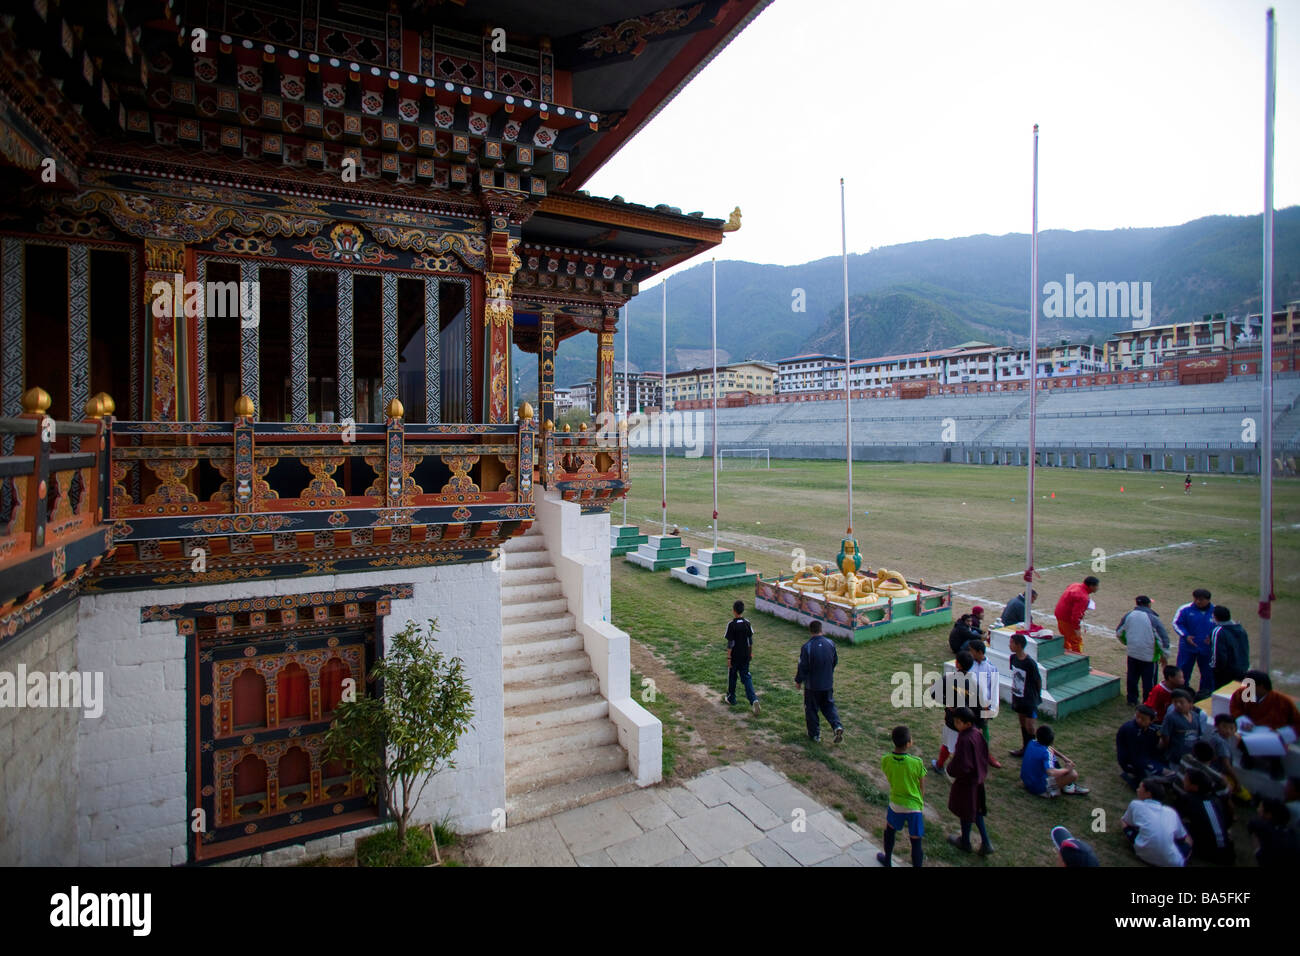 Changlimithang National Sports Stadium, ein Mehrzweck-Stadion, Thimphu, Bhutan, Asien. Horzontal Gesamtansicht Stockfoto